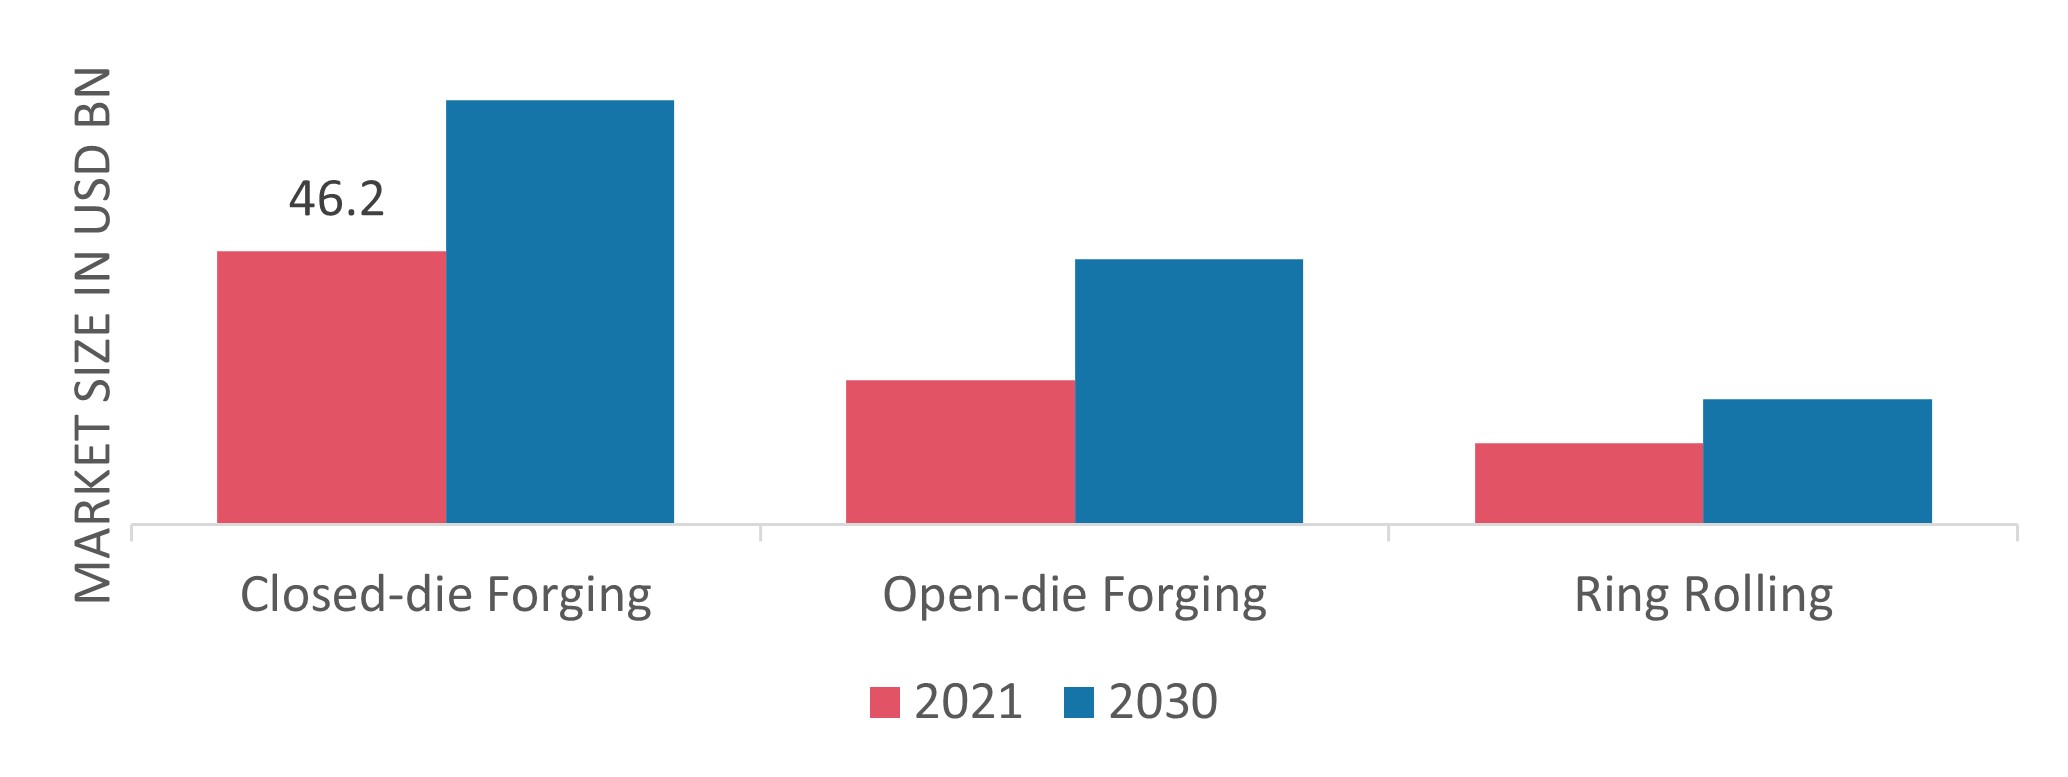 Metal Forging Market, by Type, 2021 & 2030 (USD Billion)